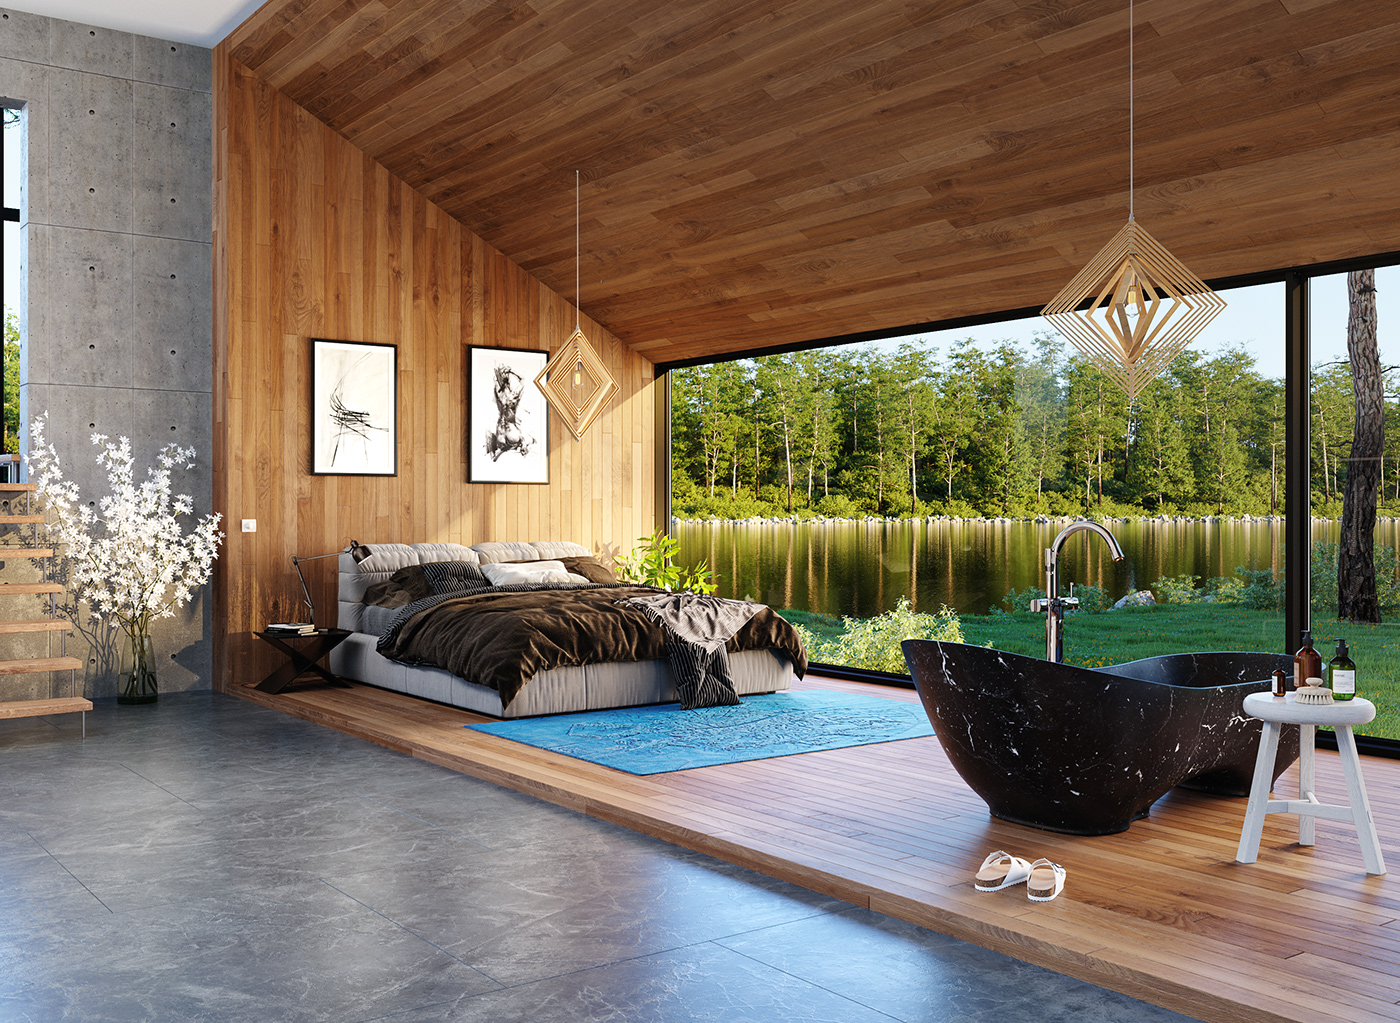 3ds max archviz corona render  Interior exterior bedroom bathroom photoschop 3D lake